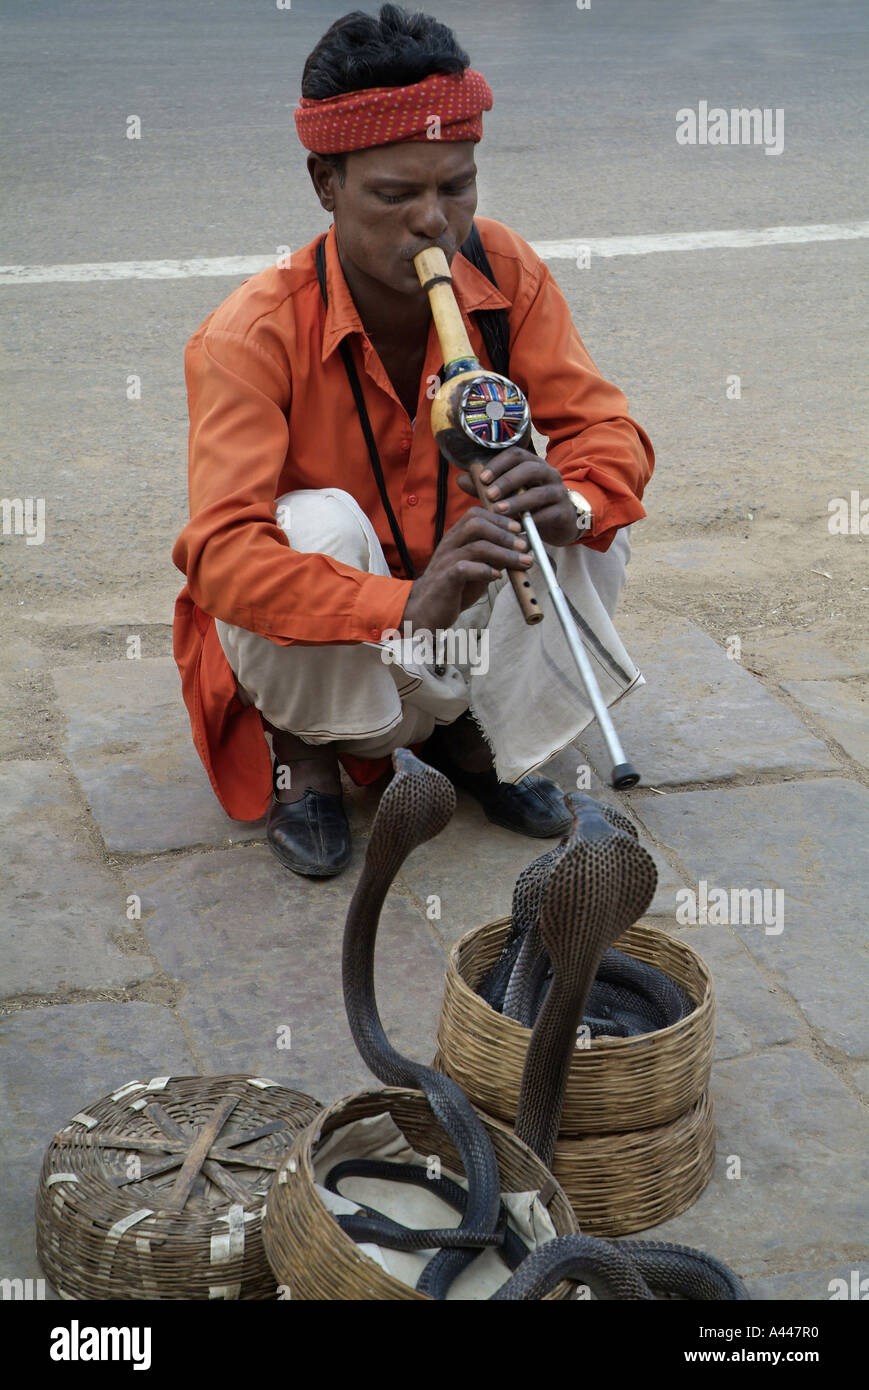 Snake Charmer in Jaipur, India Stock Photo - Alamy